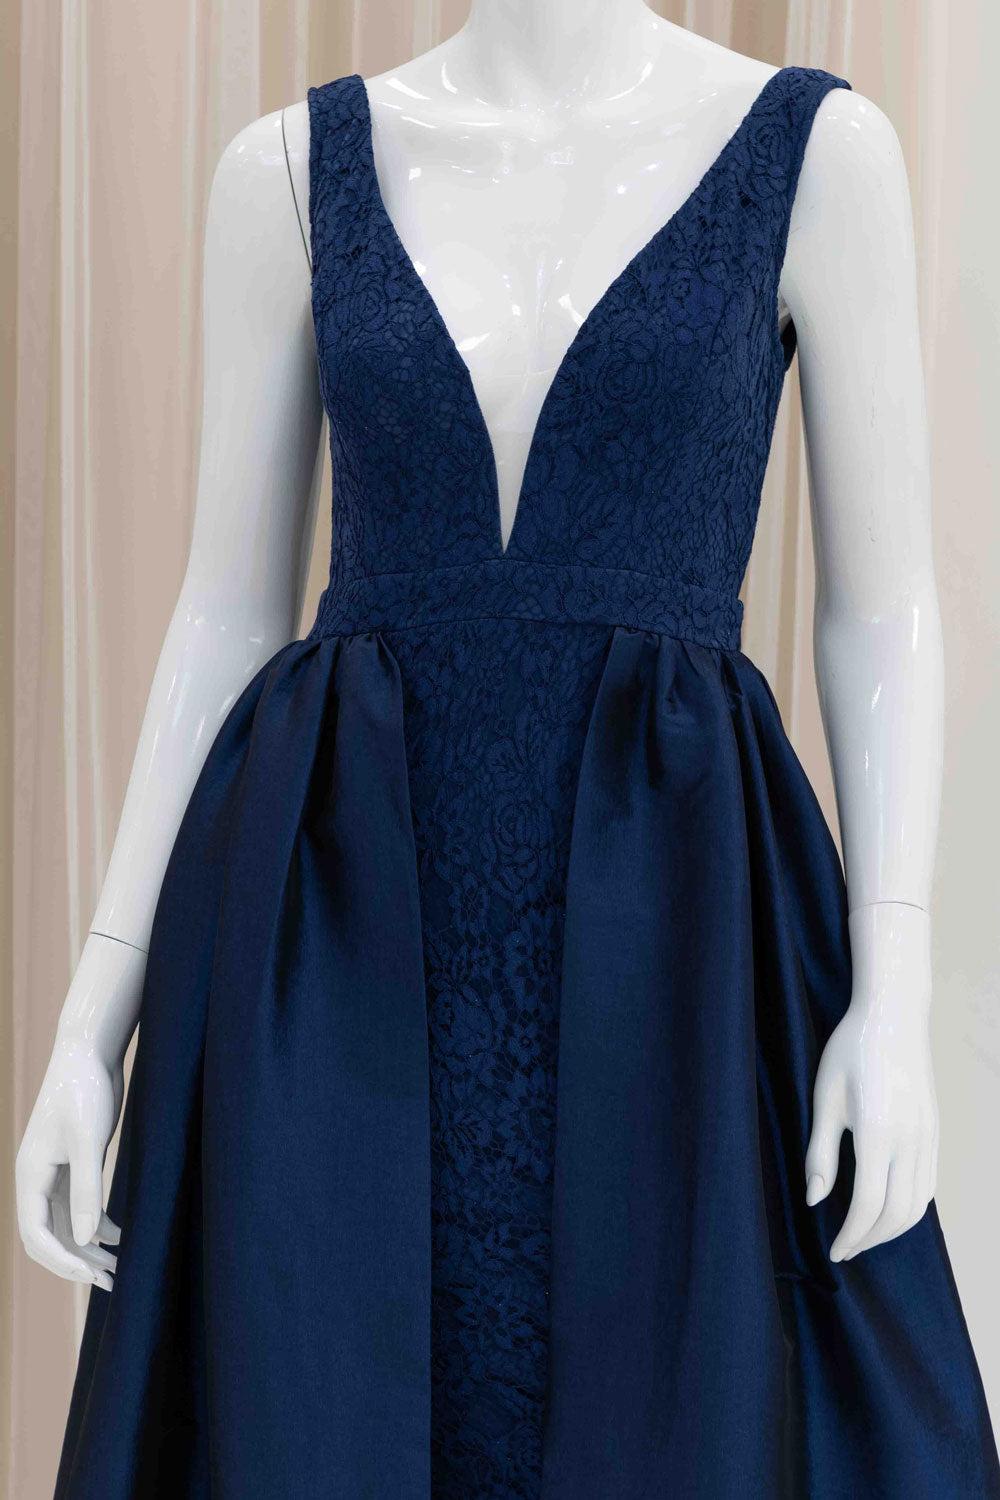 Elegant Evening Dress with Overskirt in Navy Blue